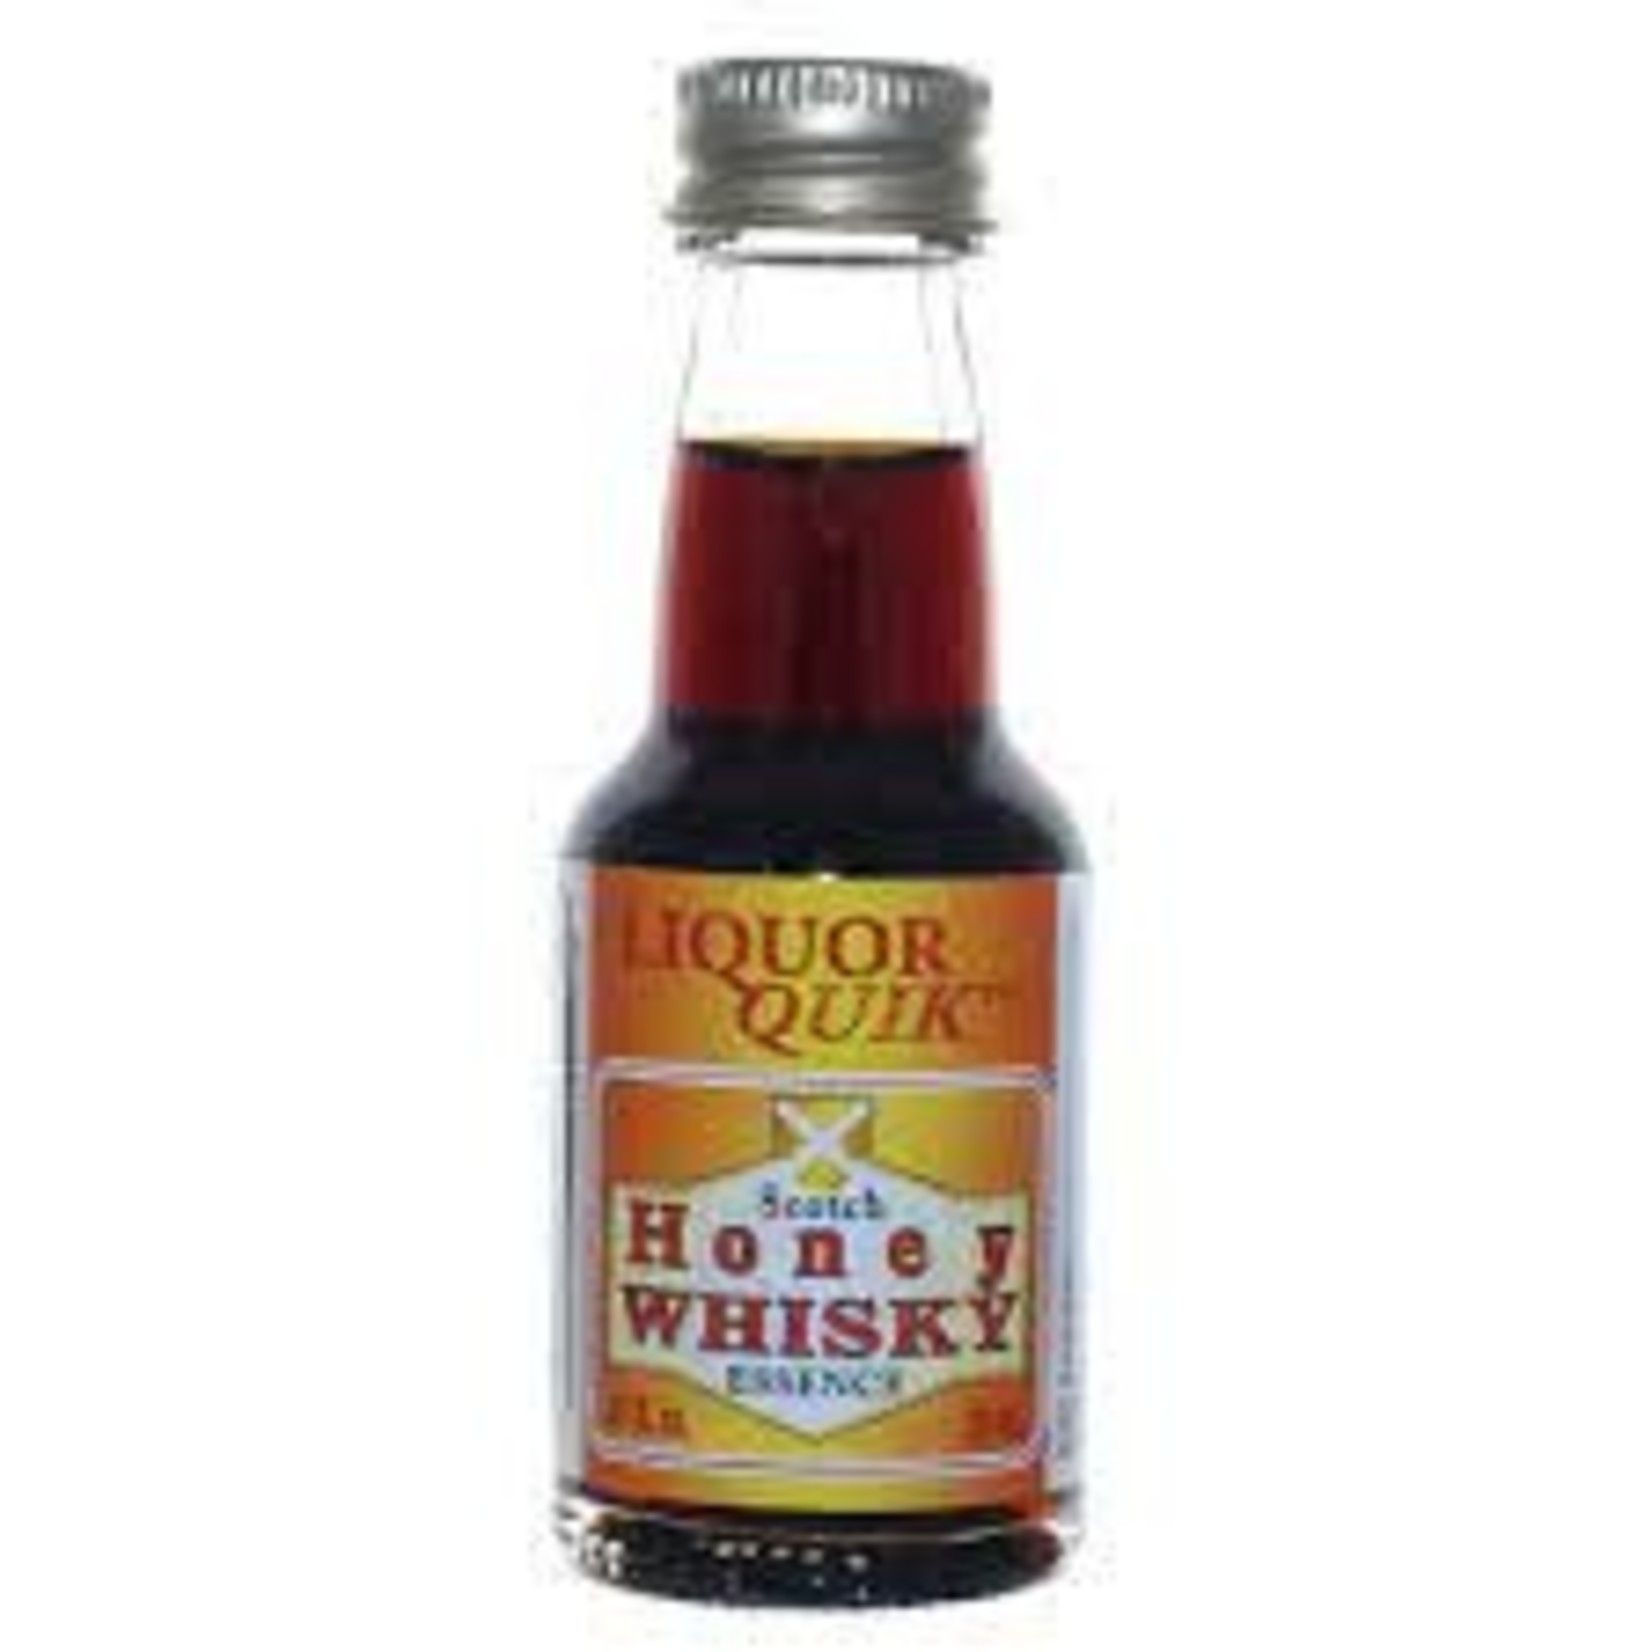 Scotch Honey Whisky Essence .65 oz